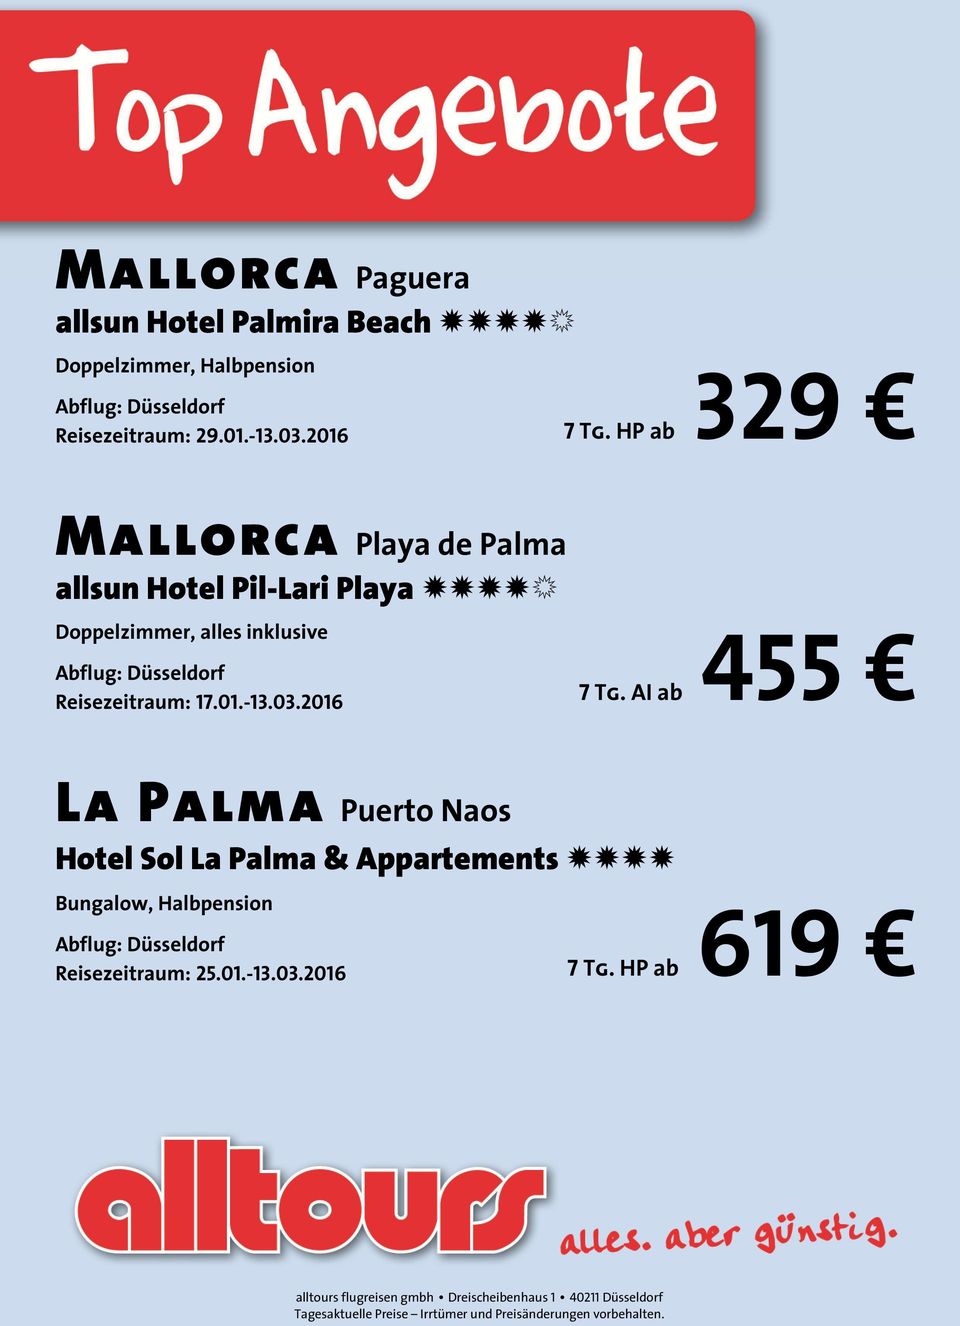 HP ab 329 Mallorca Playa de Palma allsun Hotel Pil-Lari Playa NNNNn Reisezeitraum: 17.01.